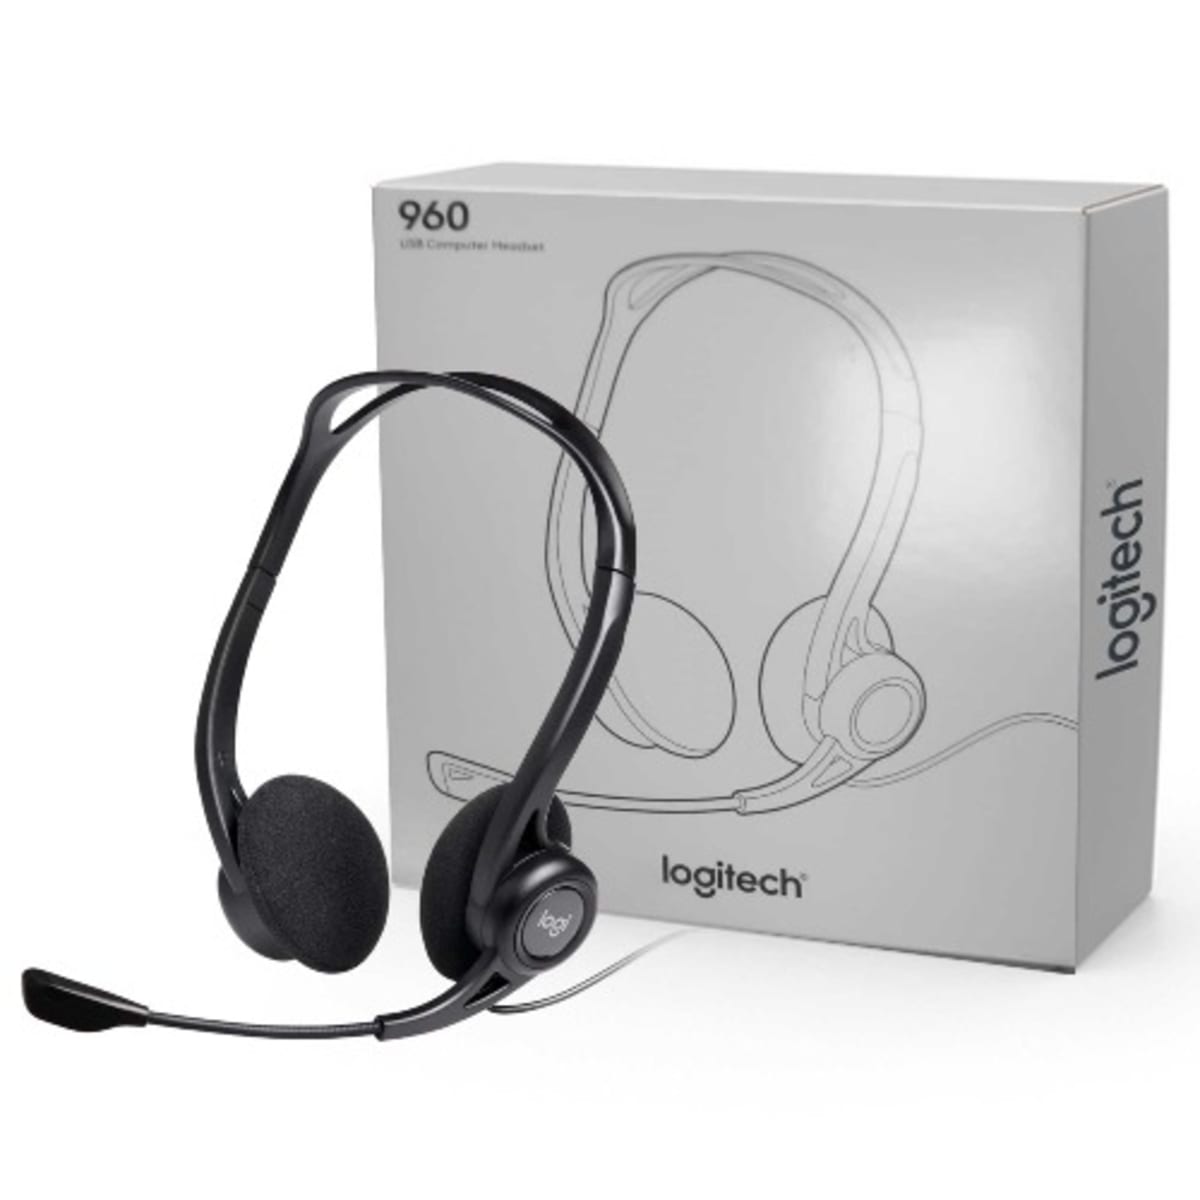 Pc | USB Konga Logitech Shopping Headset 960 Online